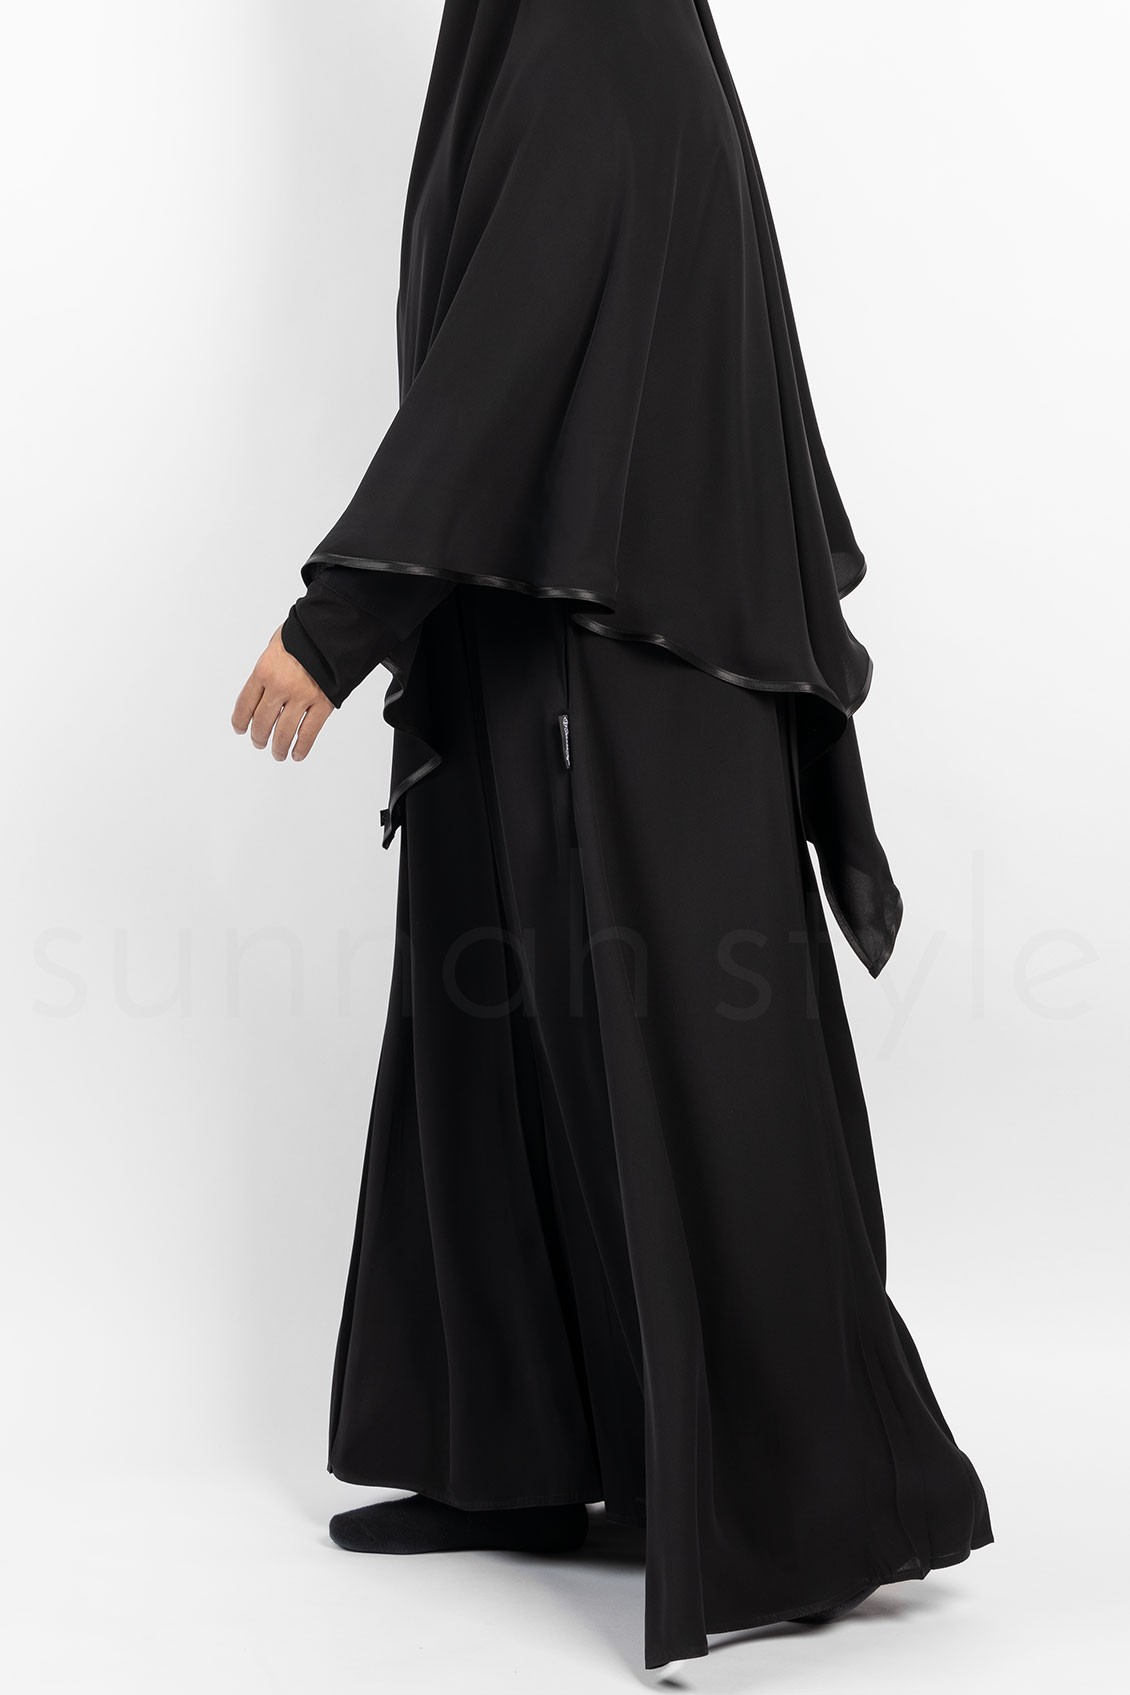 Sunnah Style Satin Trimmed Diamond Khimar Black